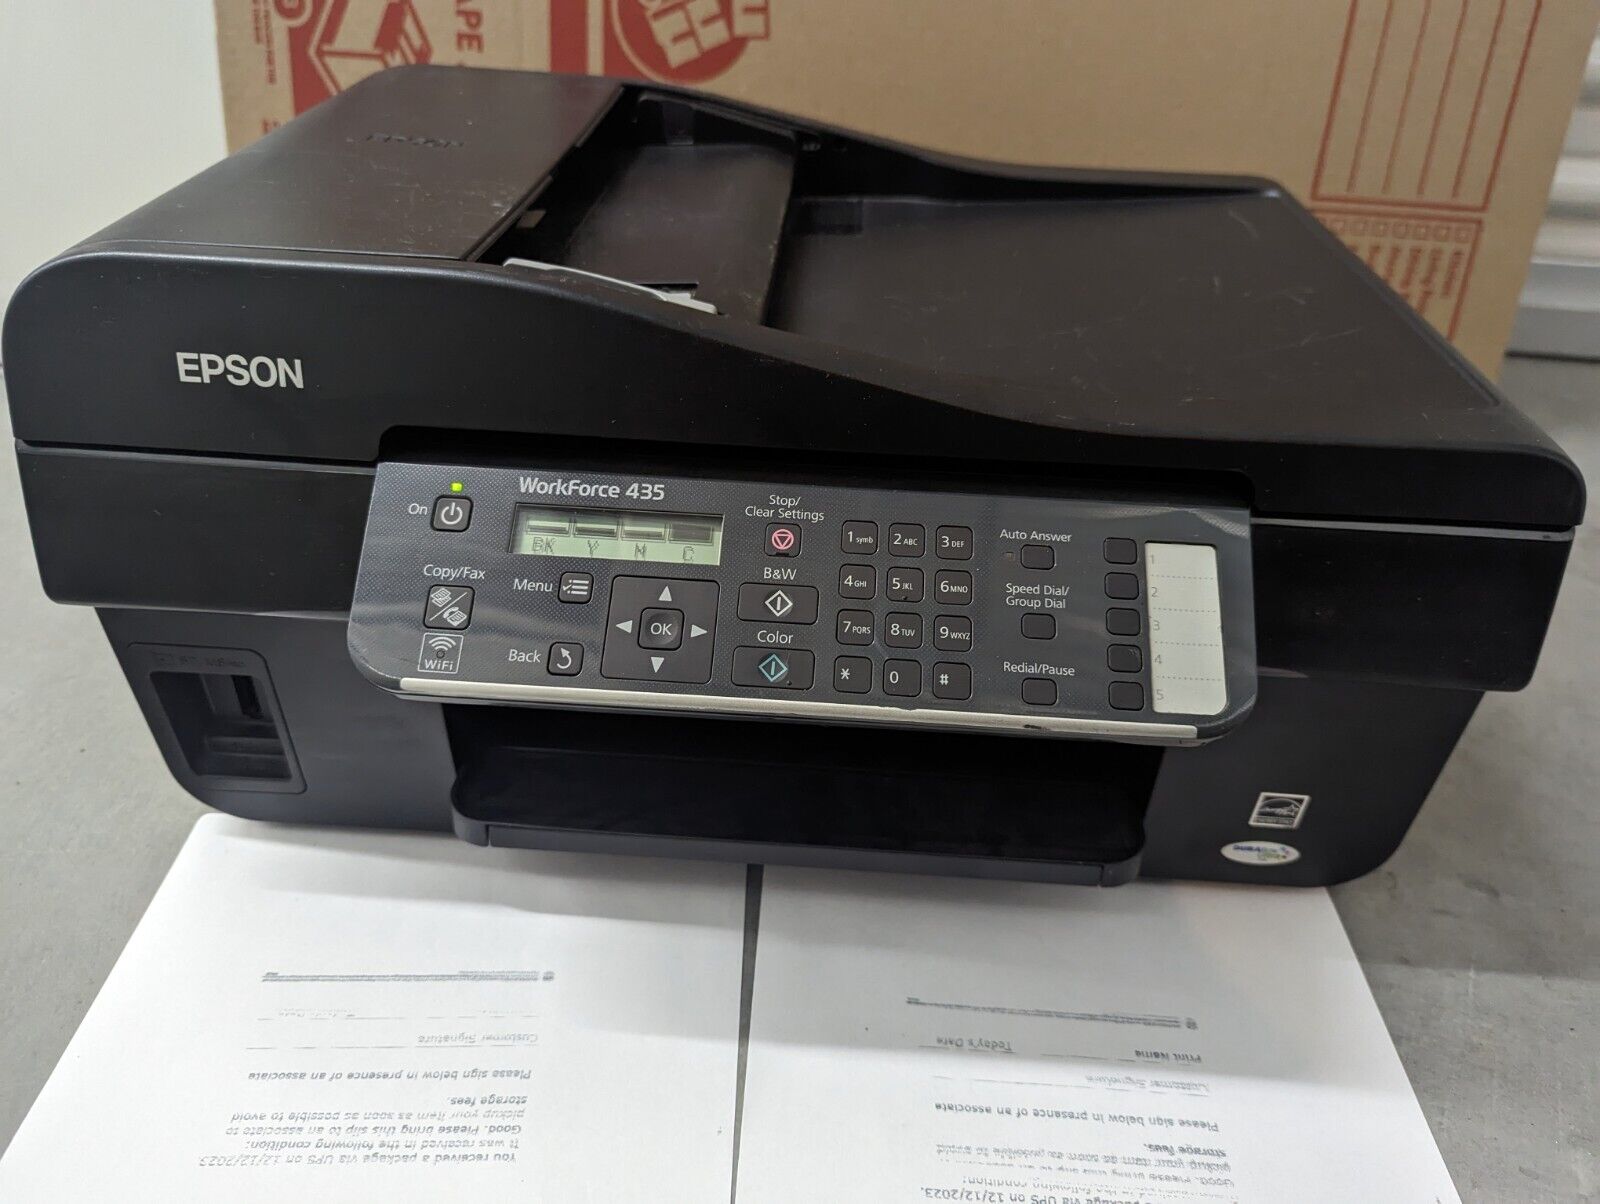 (Read) Epson WF-435 Workforce 435 All-In-One Inkjet Printer